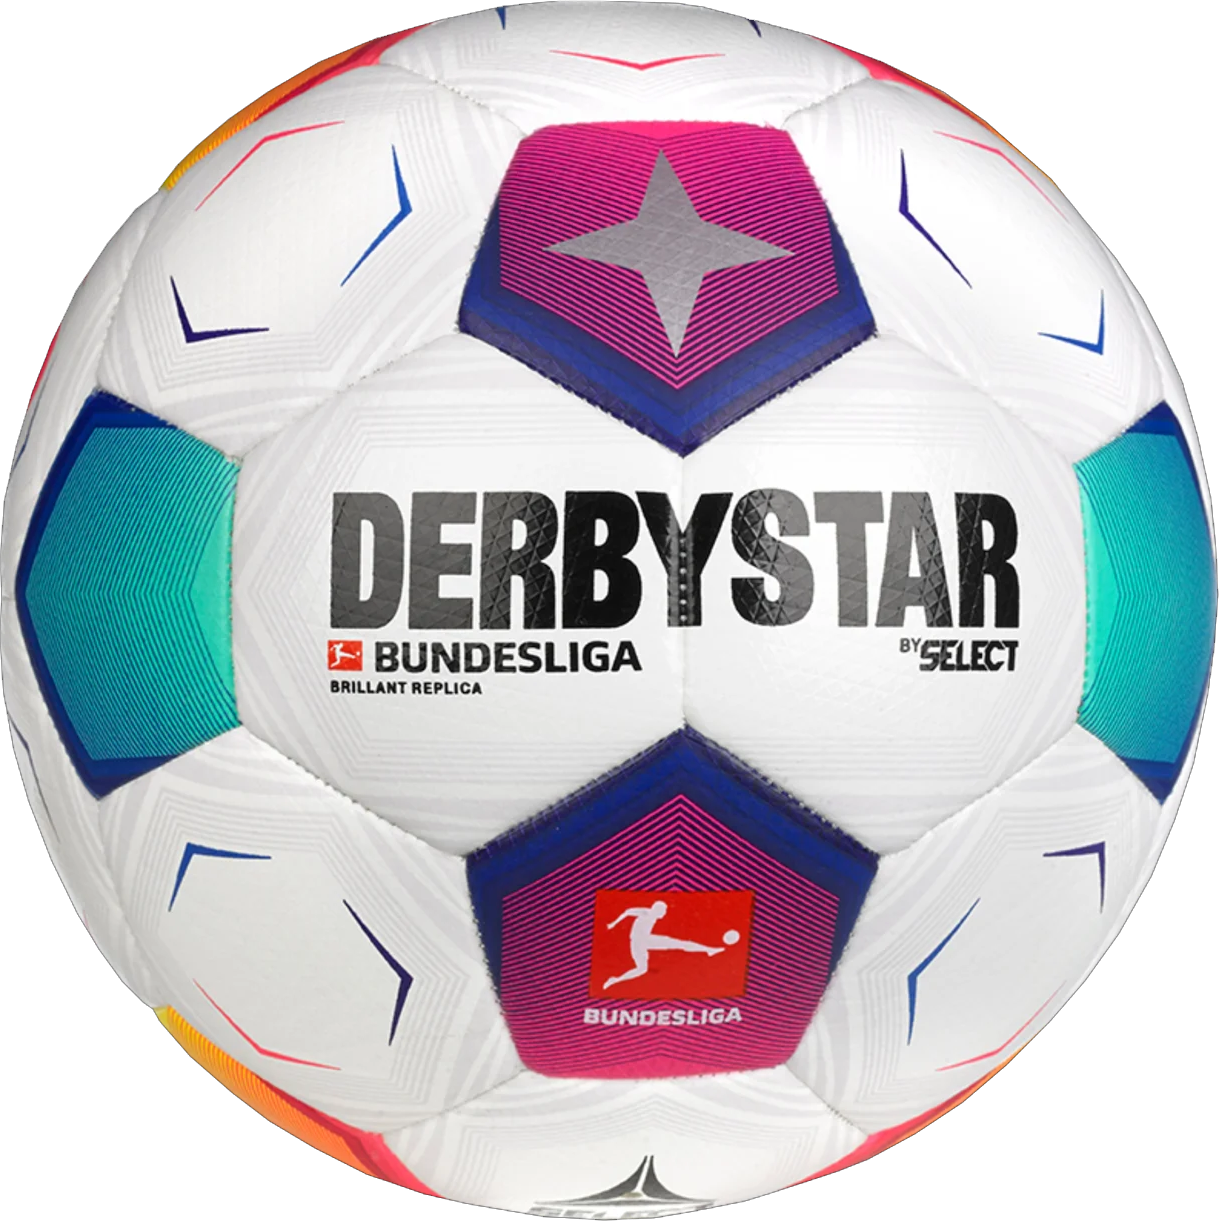 Derbystar Bundesliga Brillant Replica v23 Labda